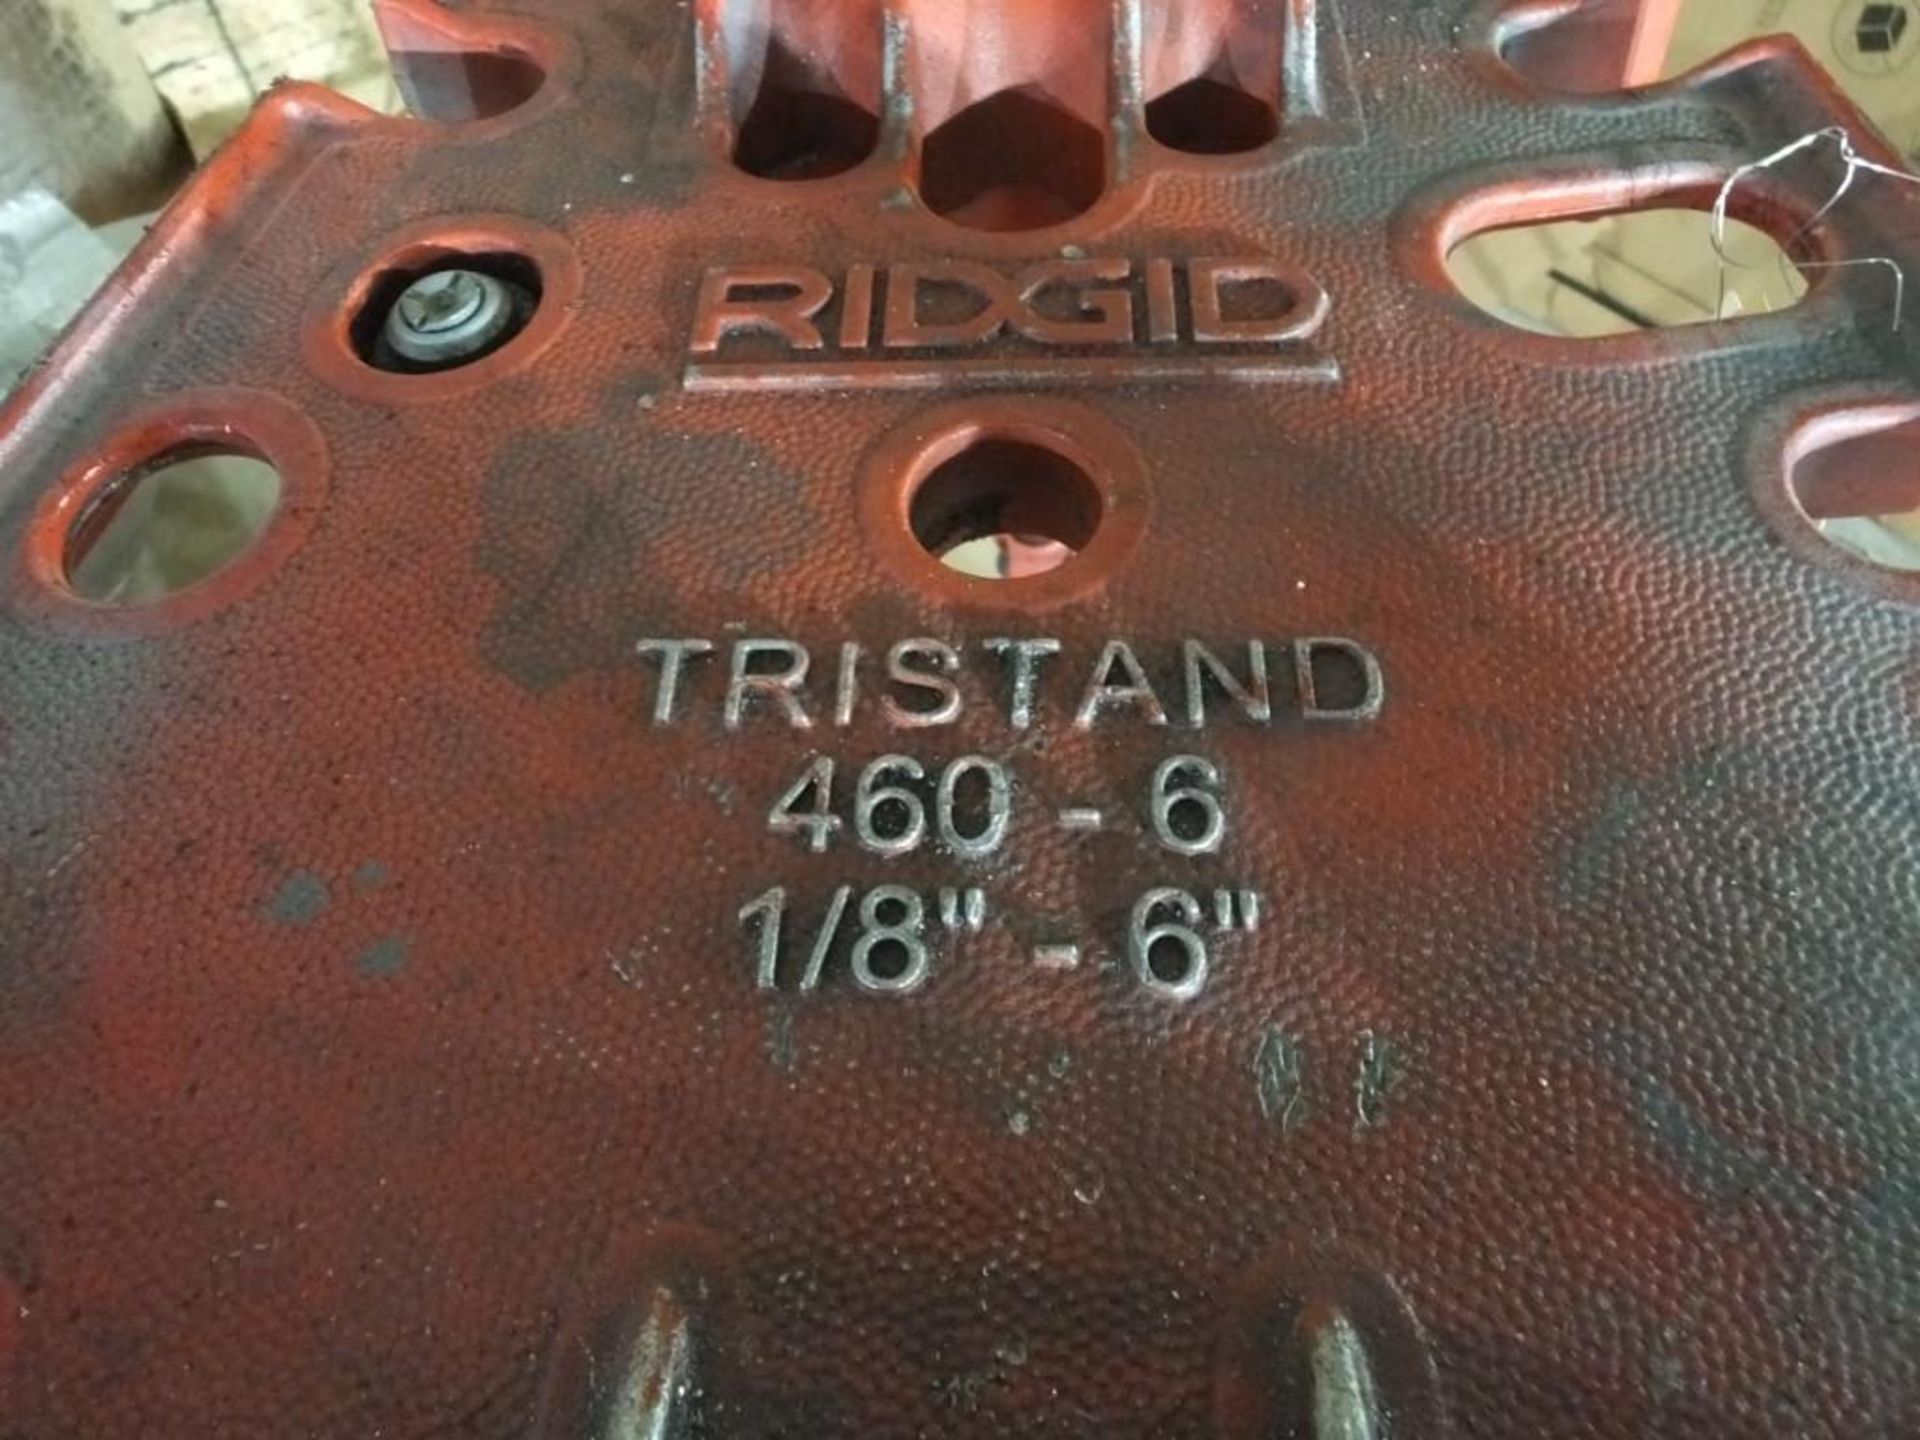 Ridgid 460-6 Portable Tristand - Image 2 of 3